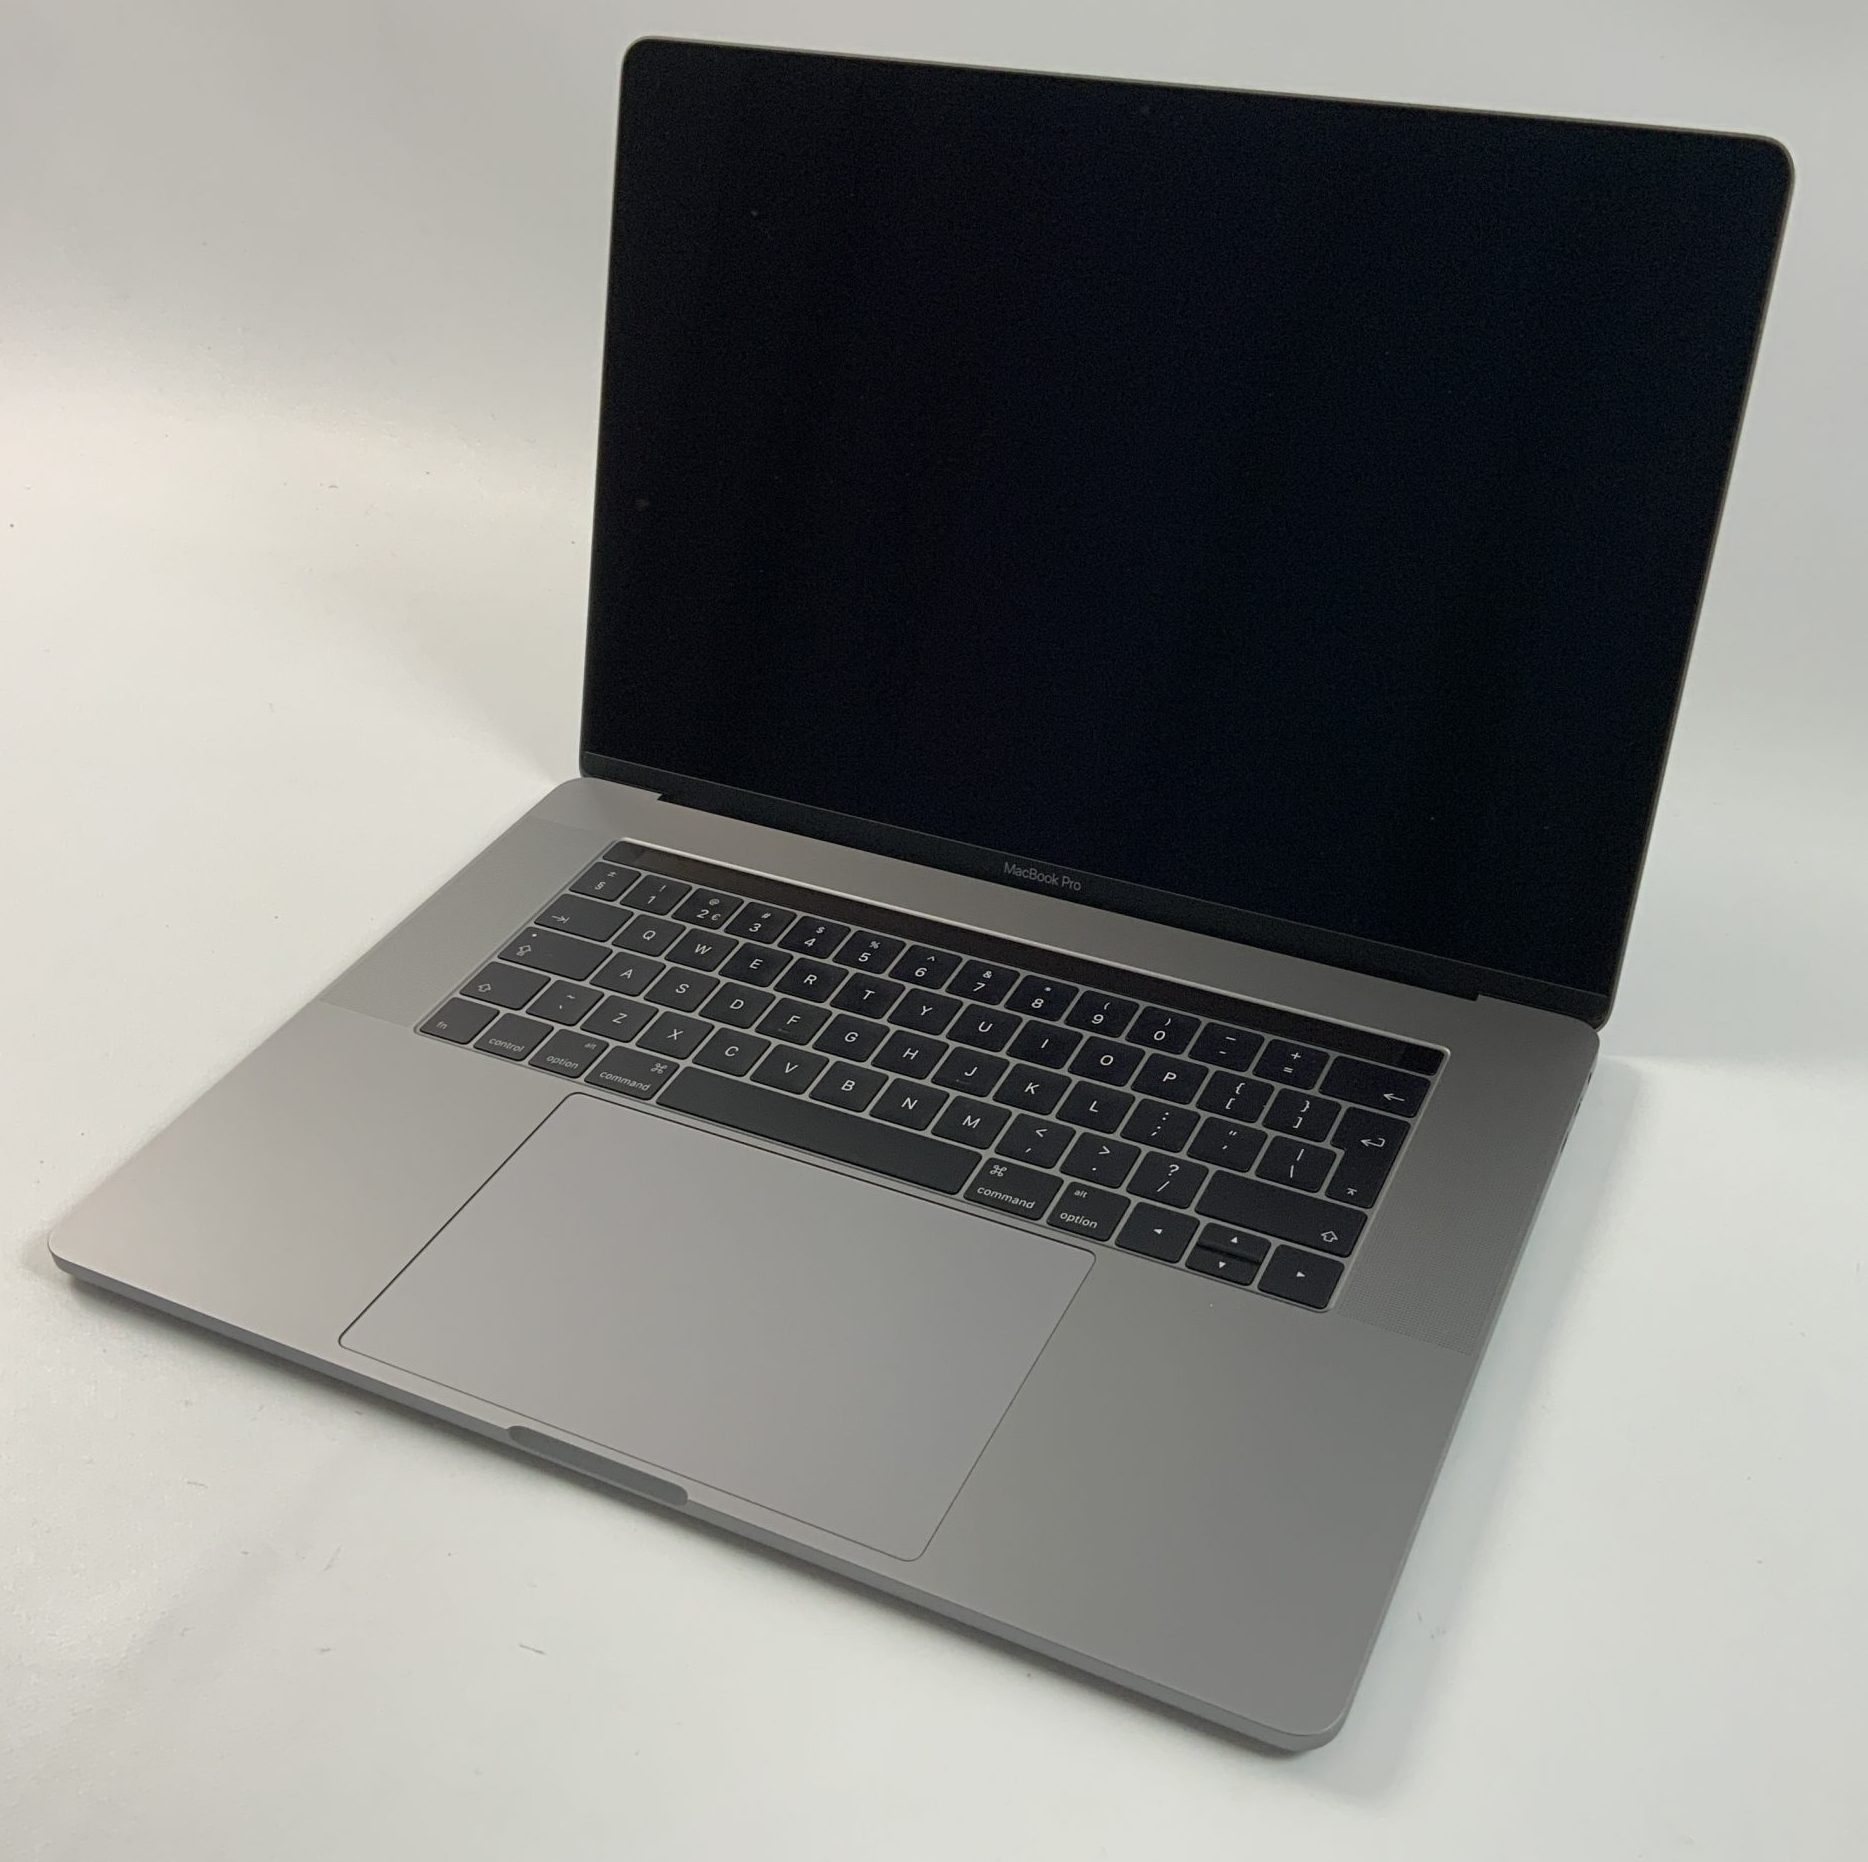 MacBook Pro 15" Touch Bar Late 2016 (Intel Quad-Core i7 2.6 GHz 16 GB RAM 256 GB SSD), Silver, Intel Quad-Core i7 2.6 GHz, 16 GB RAM, 256 GB SSD, obraz 1